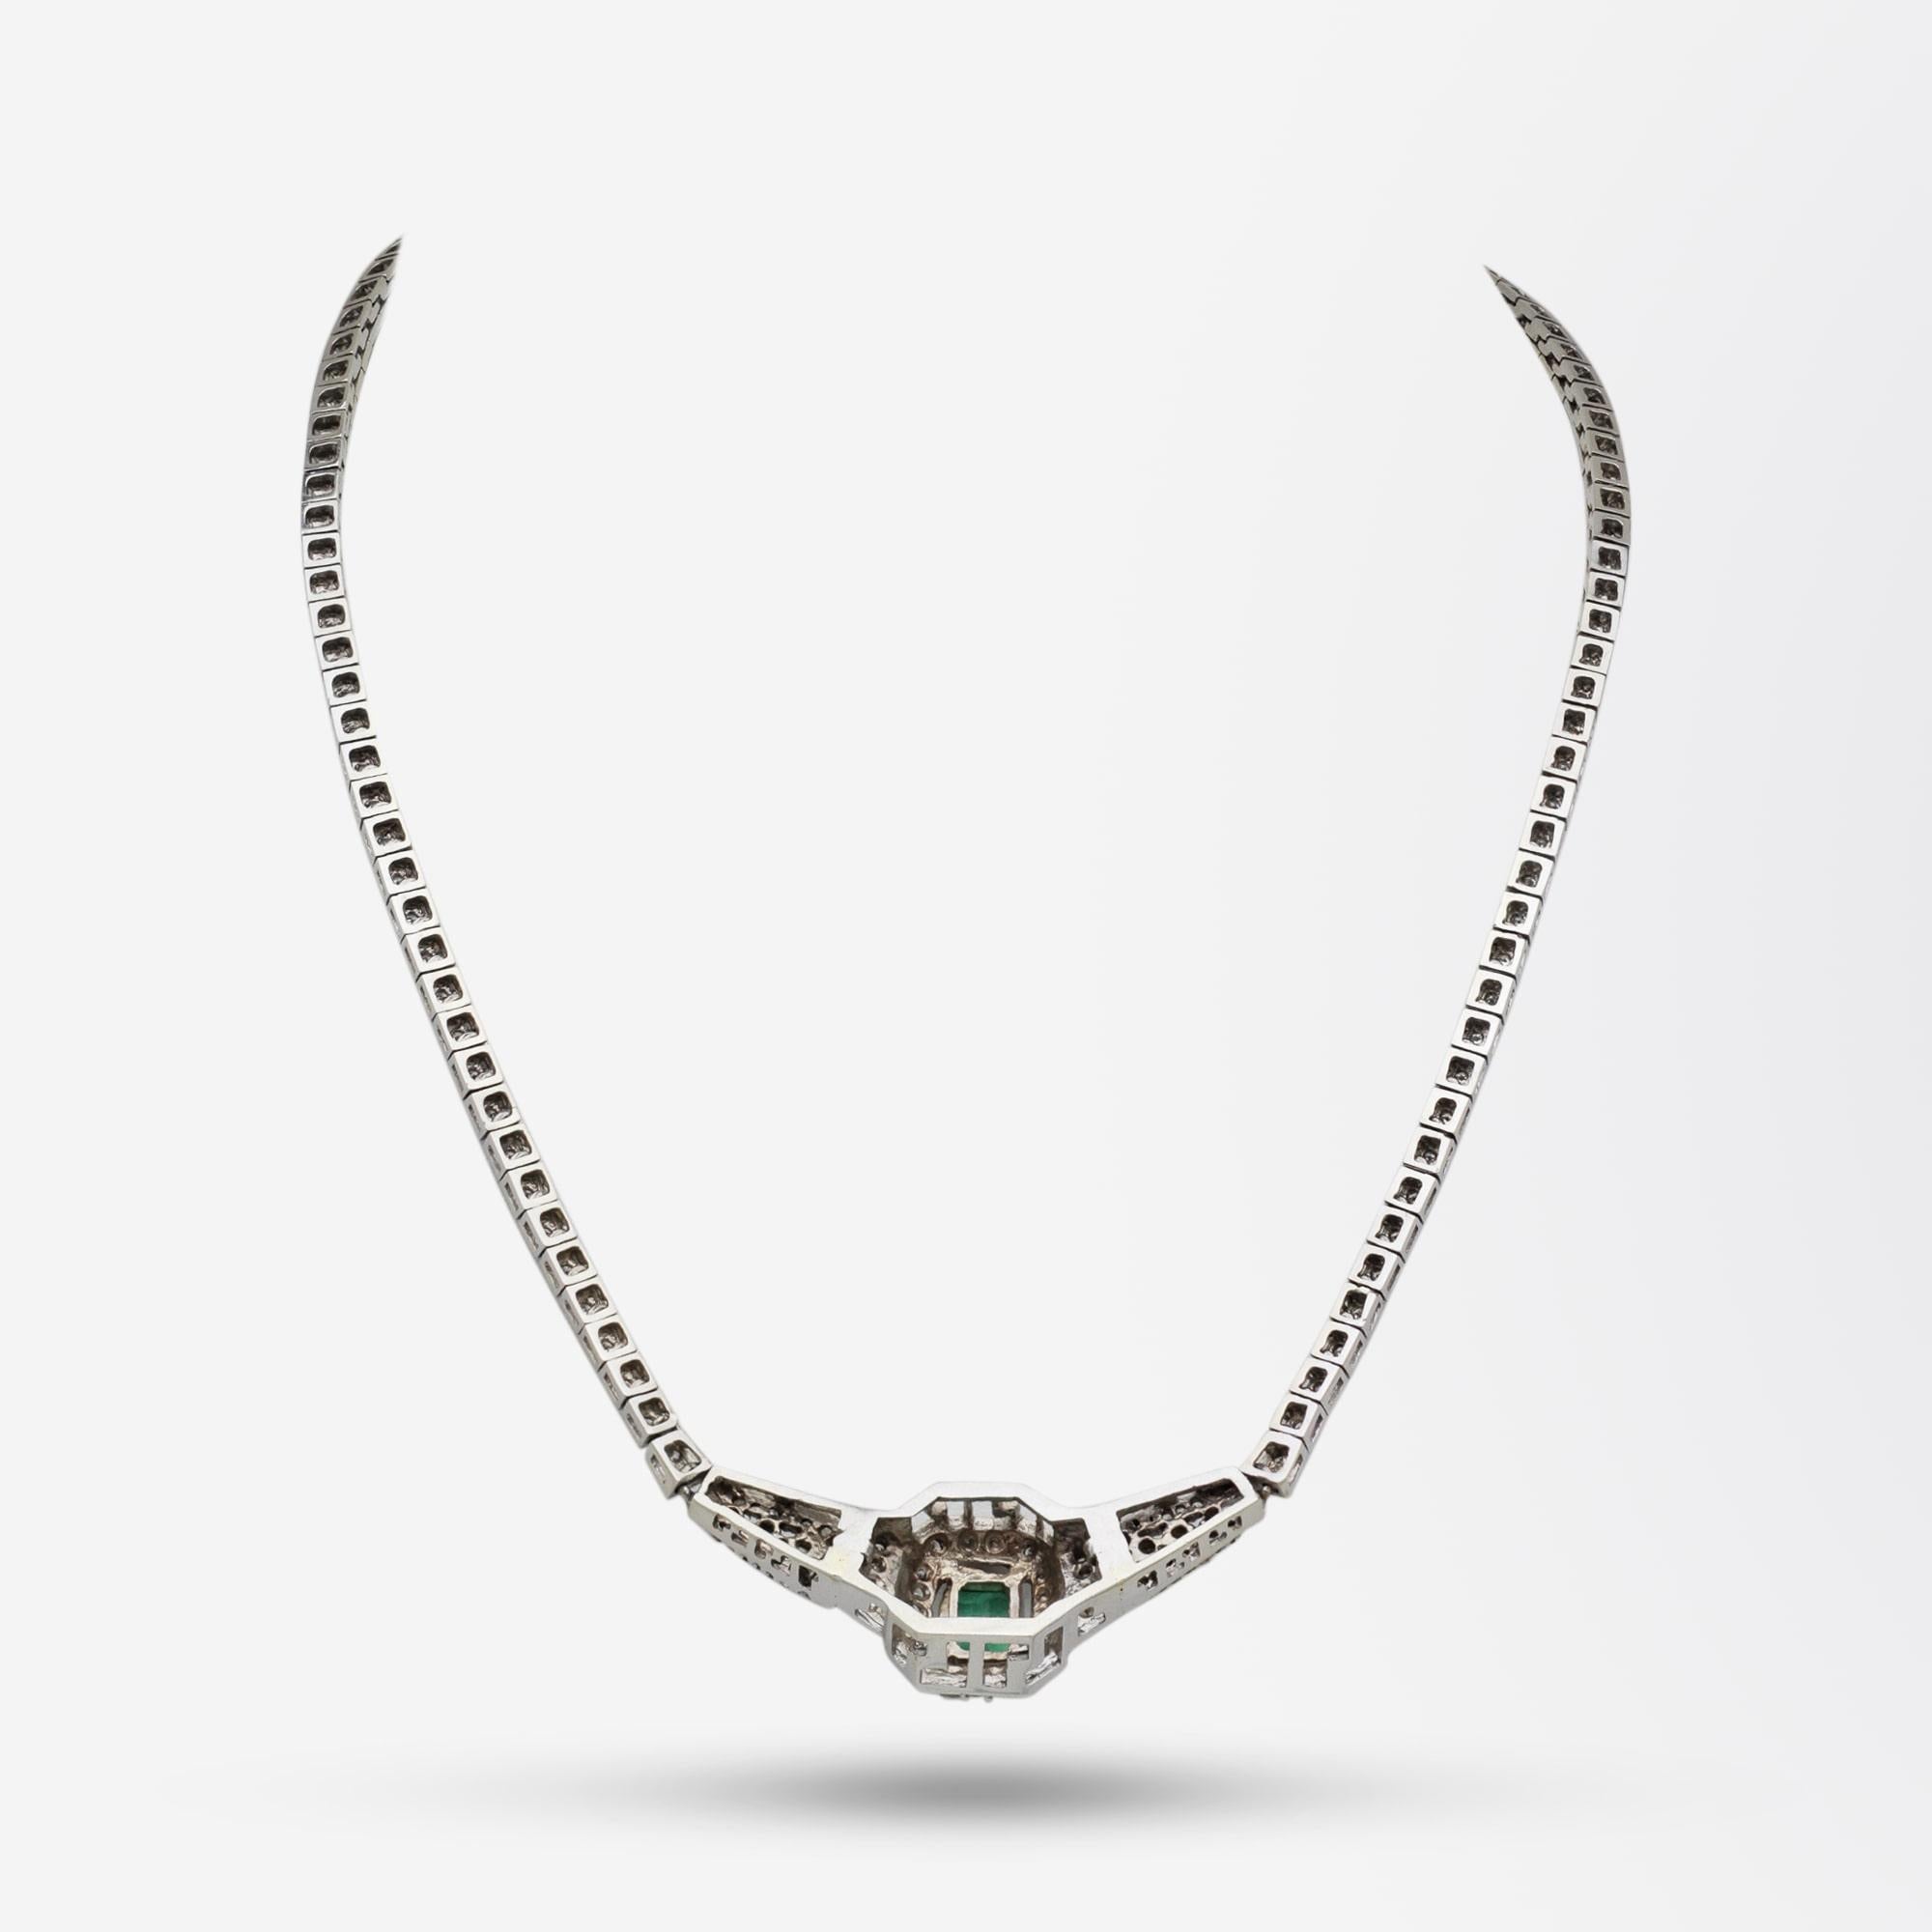 Brilliant Cut 14 Karat White Gold, Emerald, and Diamond Necklace